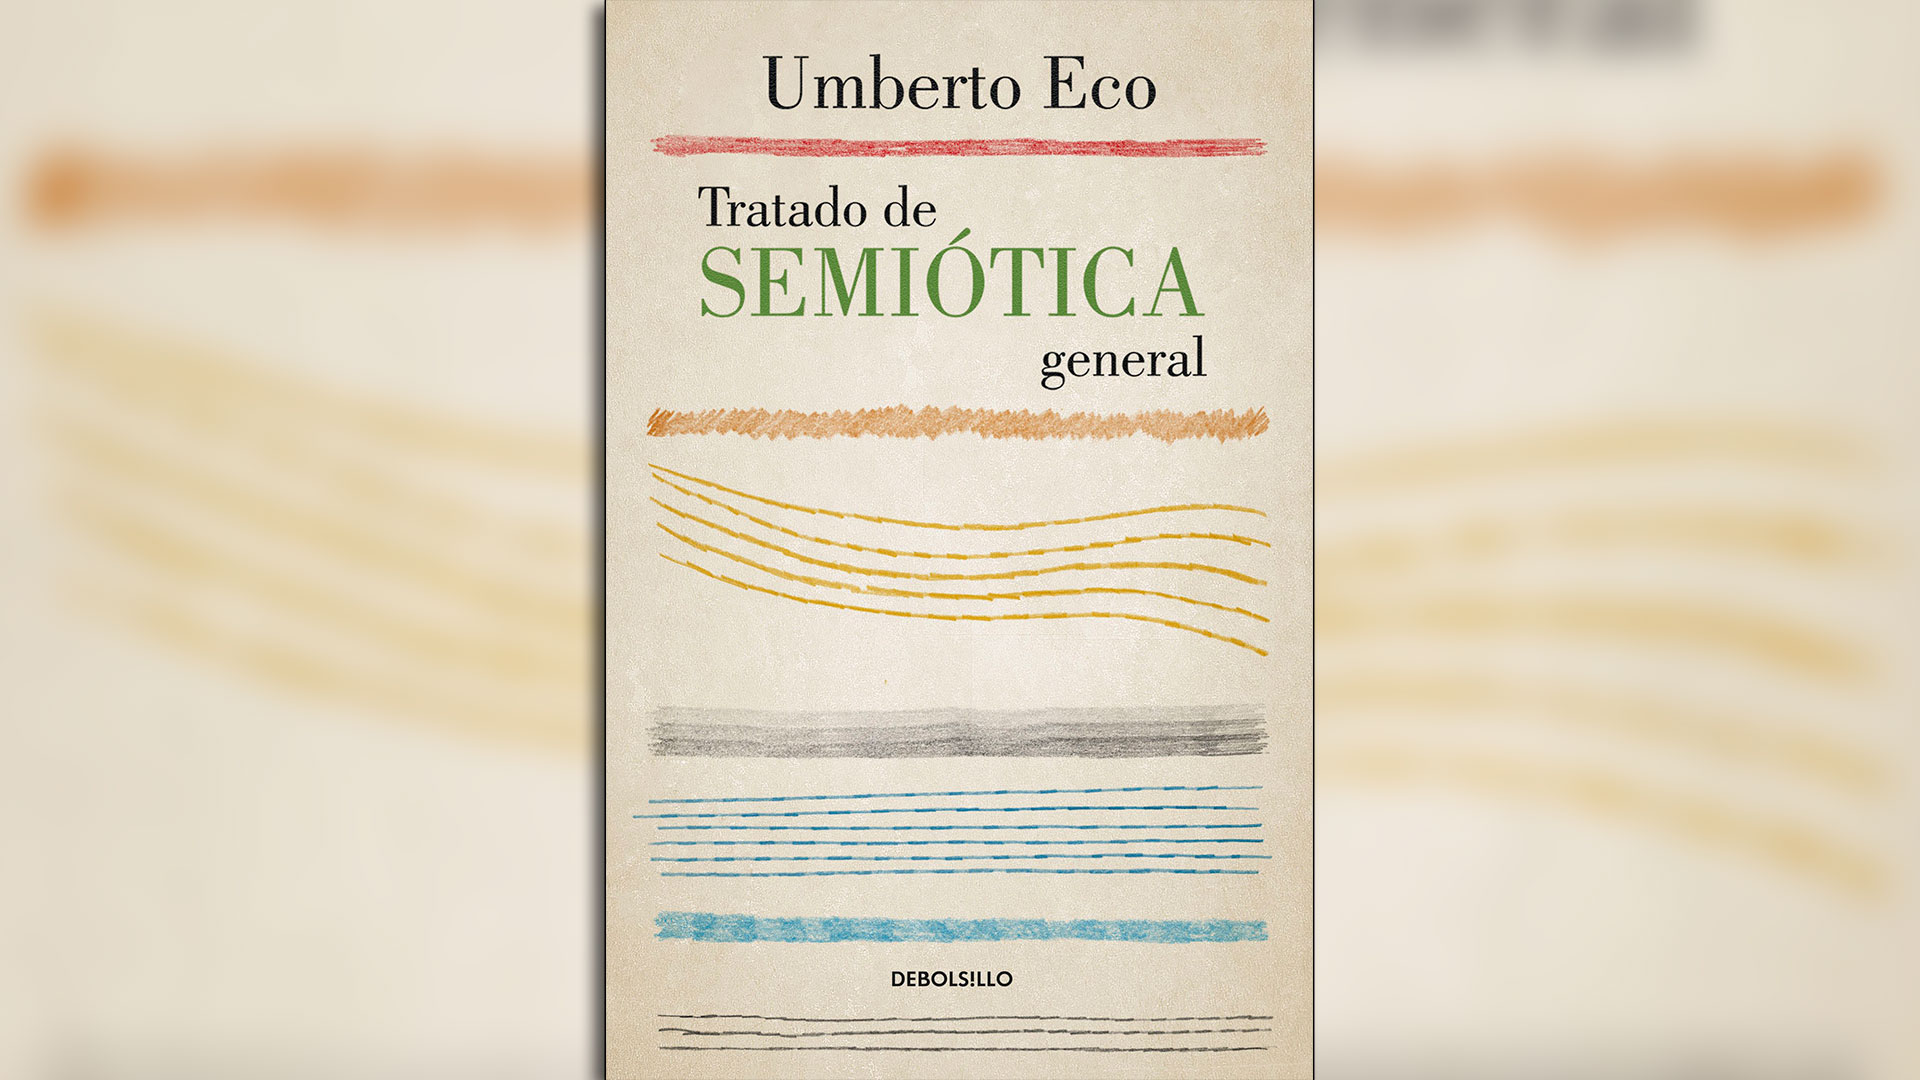 Portada de "Tratado de semiótica general", de Umberto Eco. (Penguin Random House).